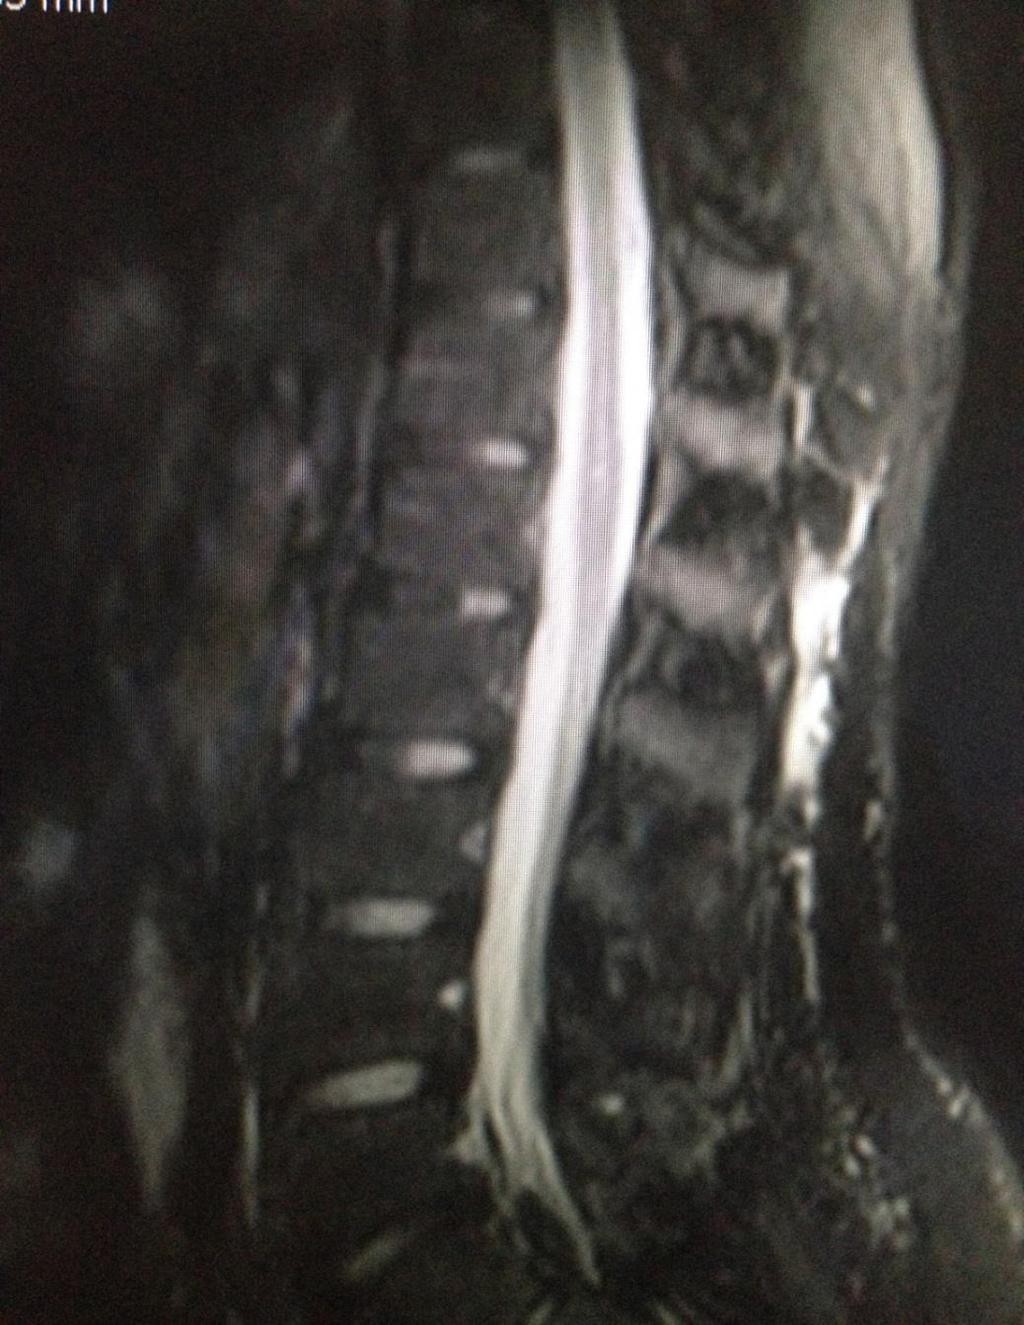 SERVİKAL, TORAKAL, LUMBAL SPİNAL MR (25/03/2013) T12-L1 seviyesinde konus düzeyinde medulla spinaliste sagittal T2A ve STIR